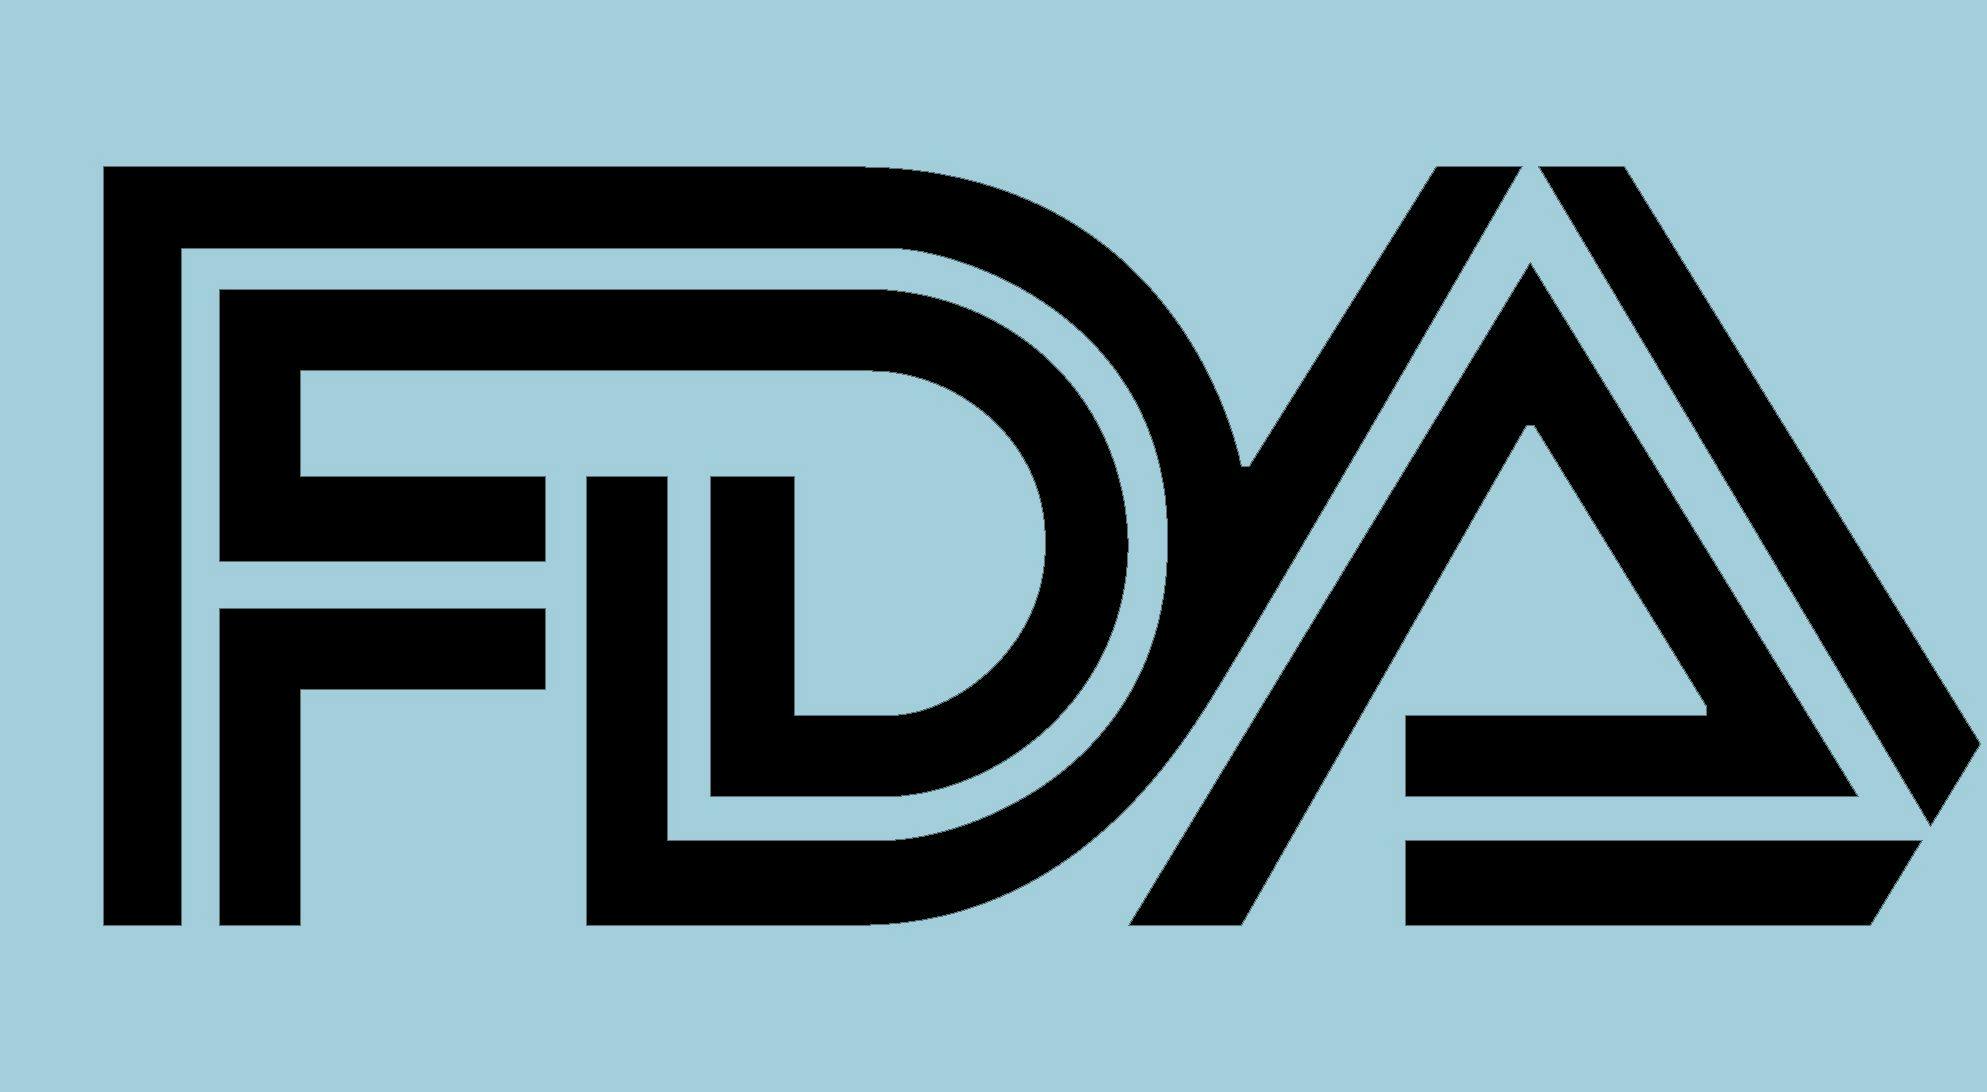 Image of the FDA logo on a light blue background.